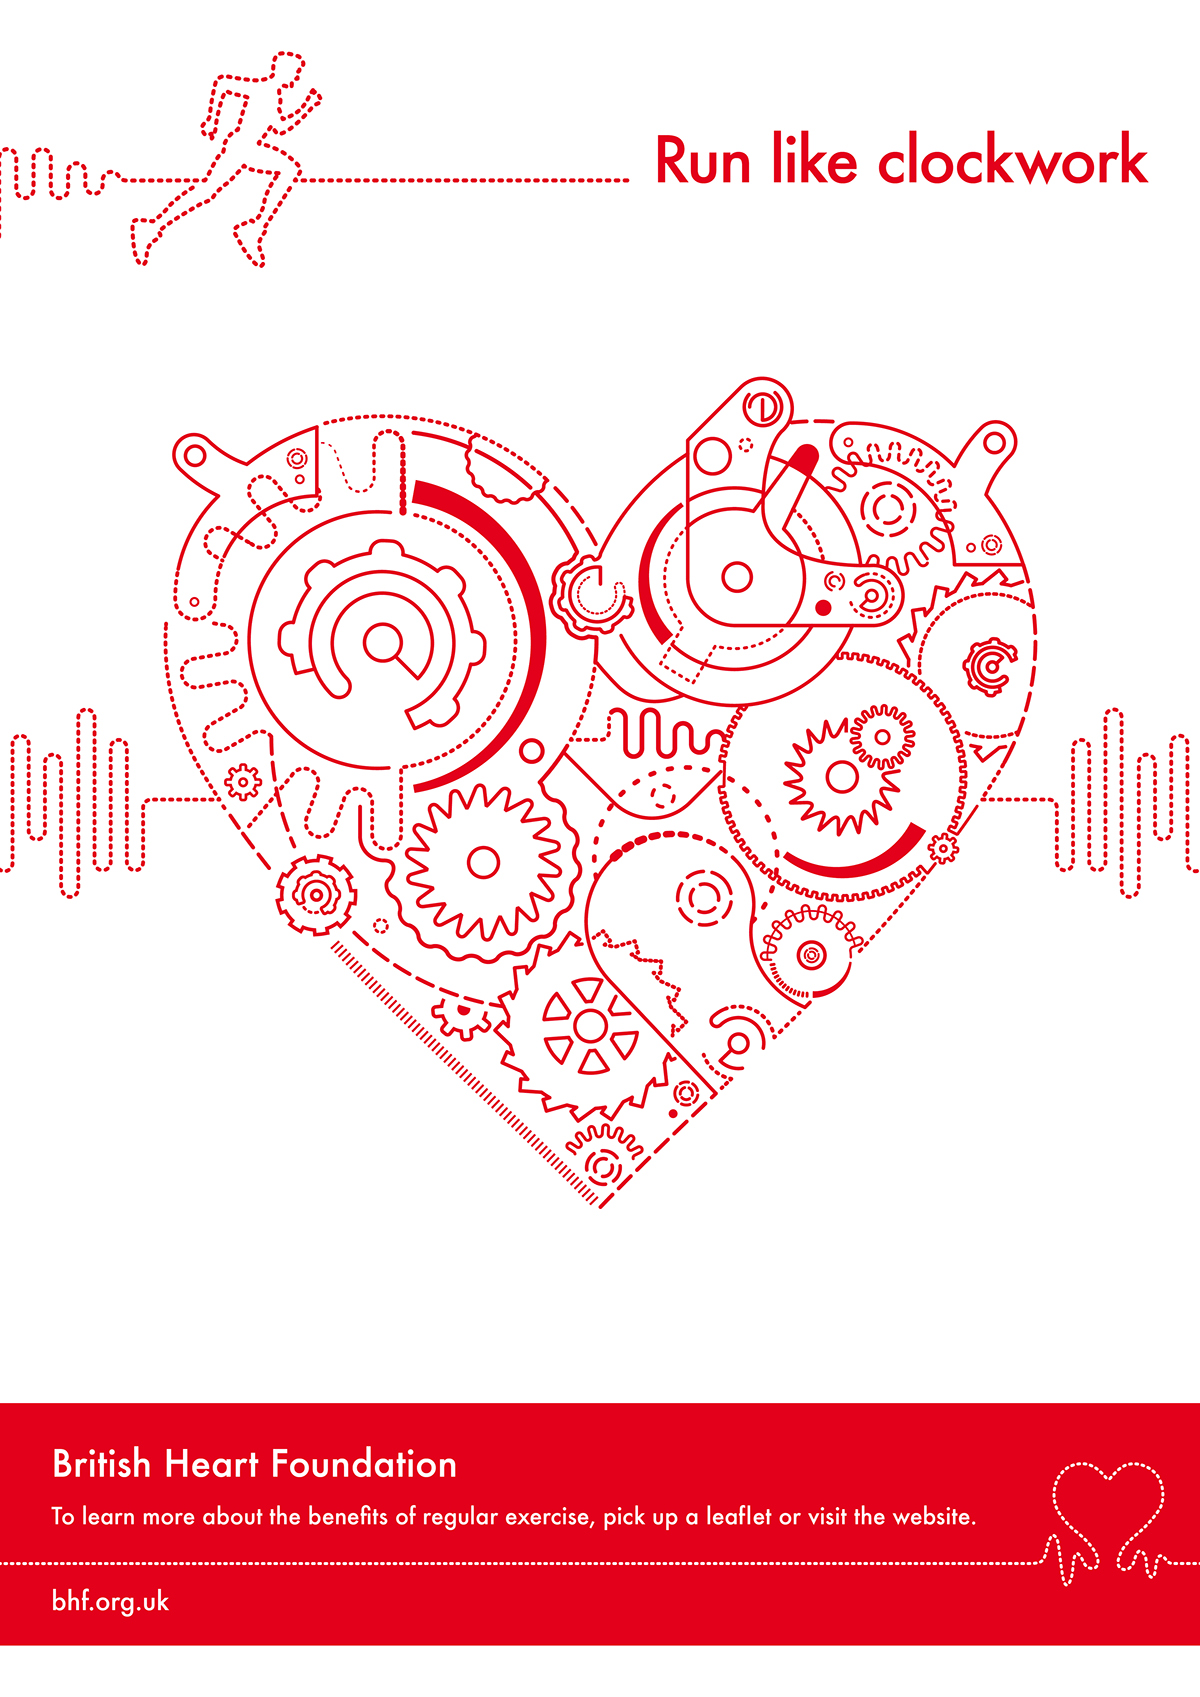 Adobe Portfolio Advertising Campaign ad campaign adshel storyboard graphics design single colour heart Cogs